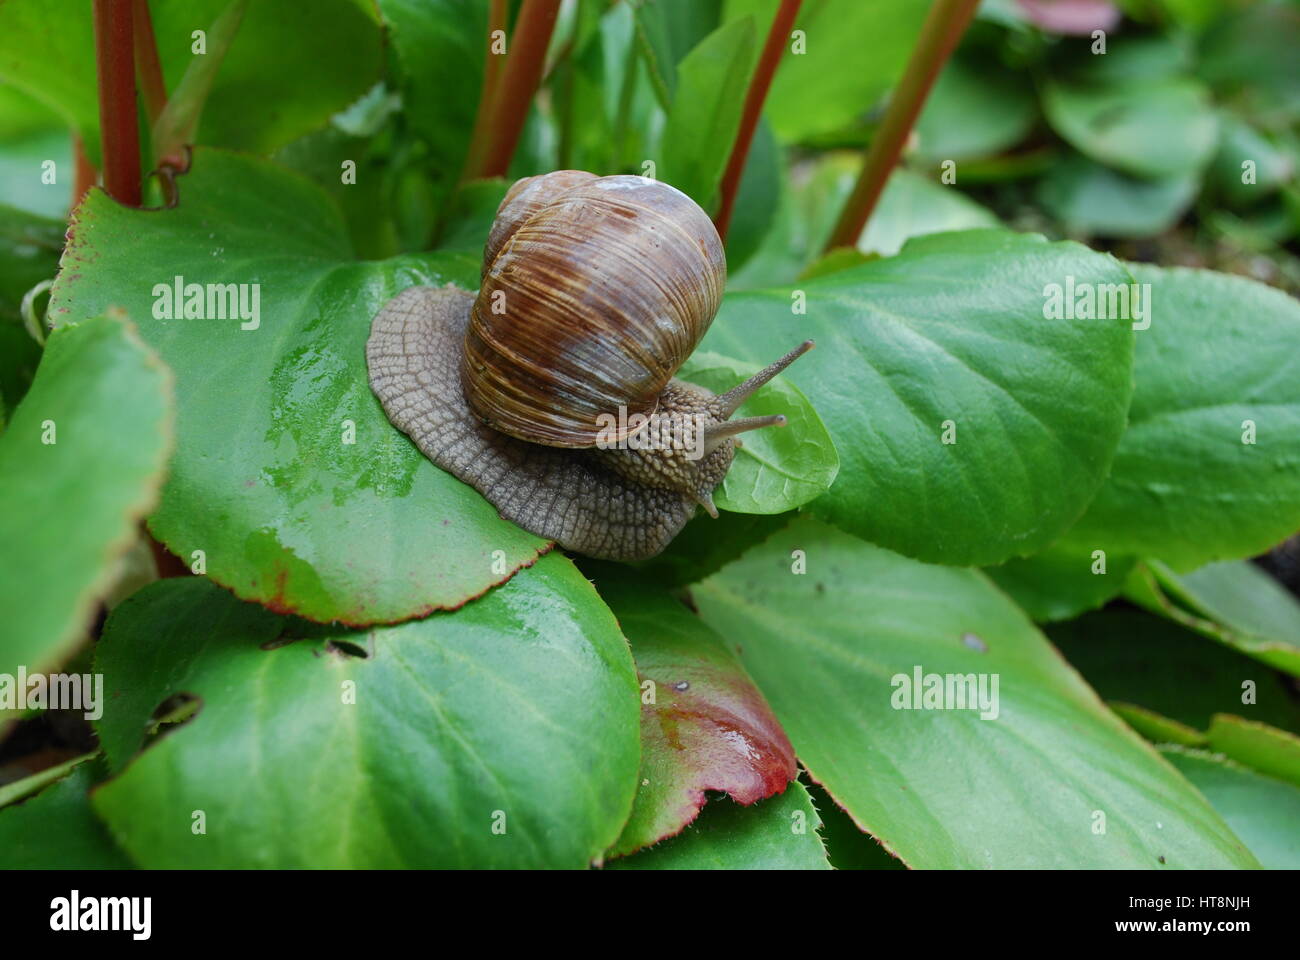 Snail crawling on green leaves. Helix pomatia (common names the Burgundy snail, Roman snail, edible snail or escargot). Stock Photo